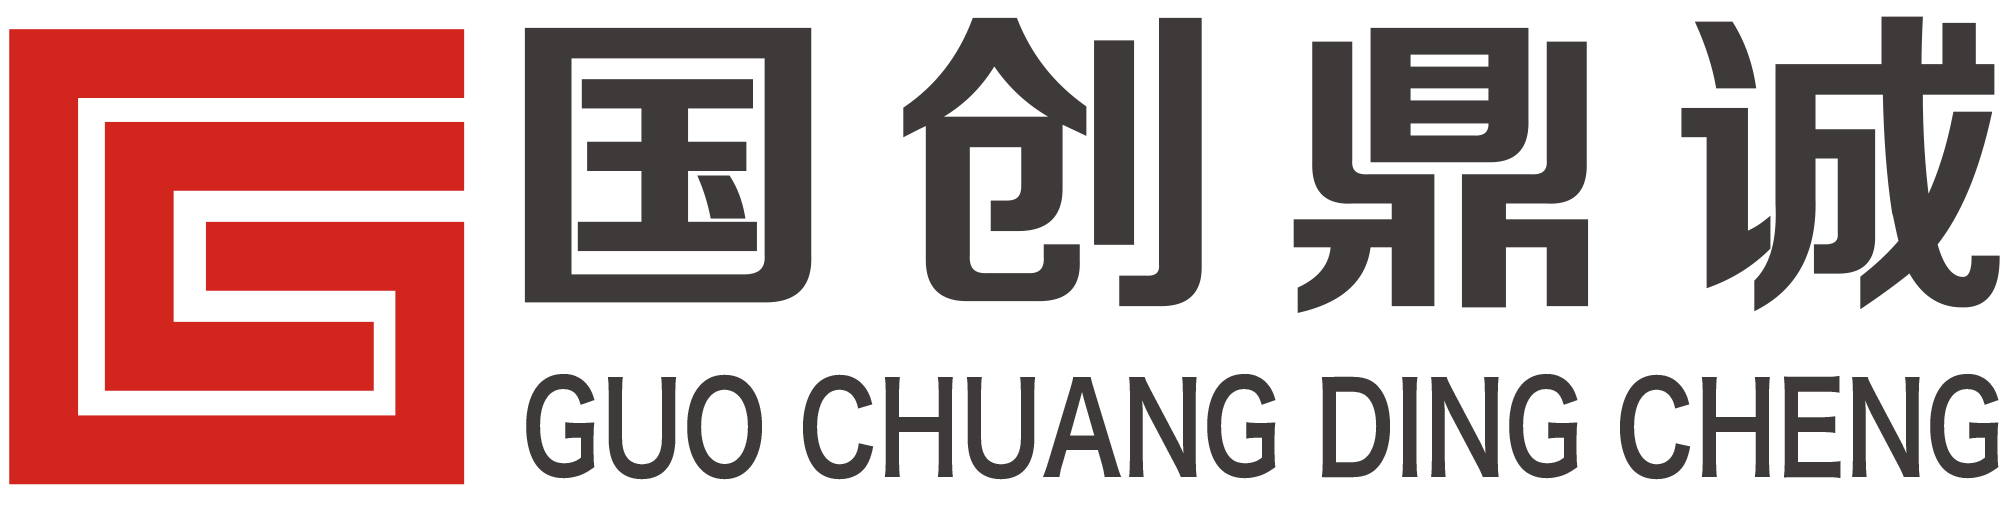 Beijing GuoChuangDingCheng Identification Institute